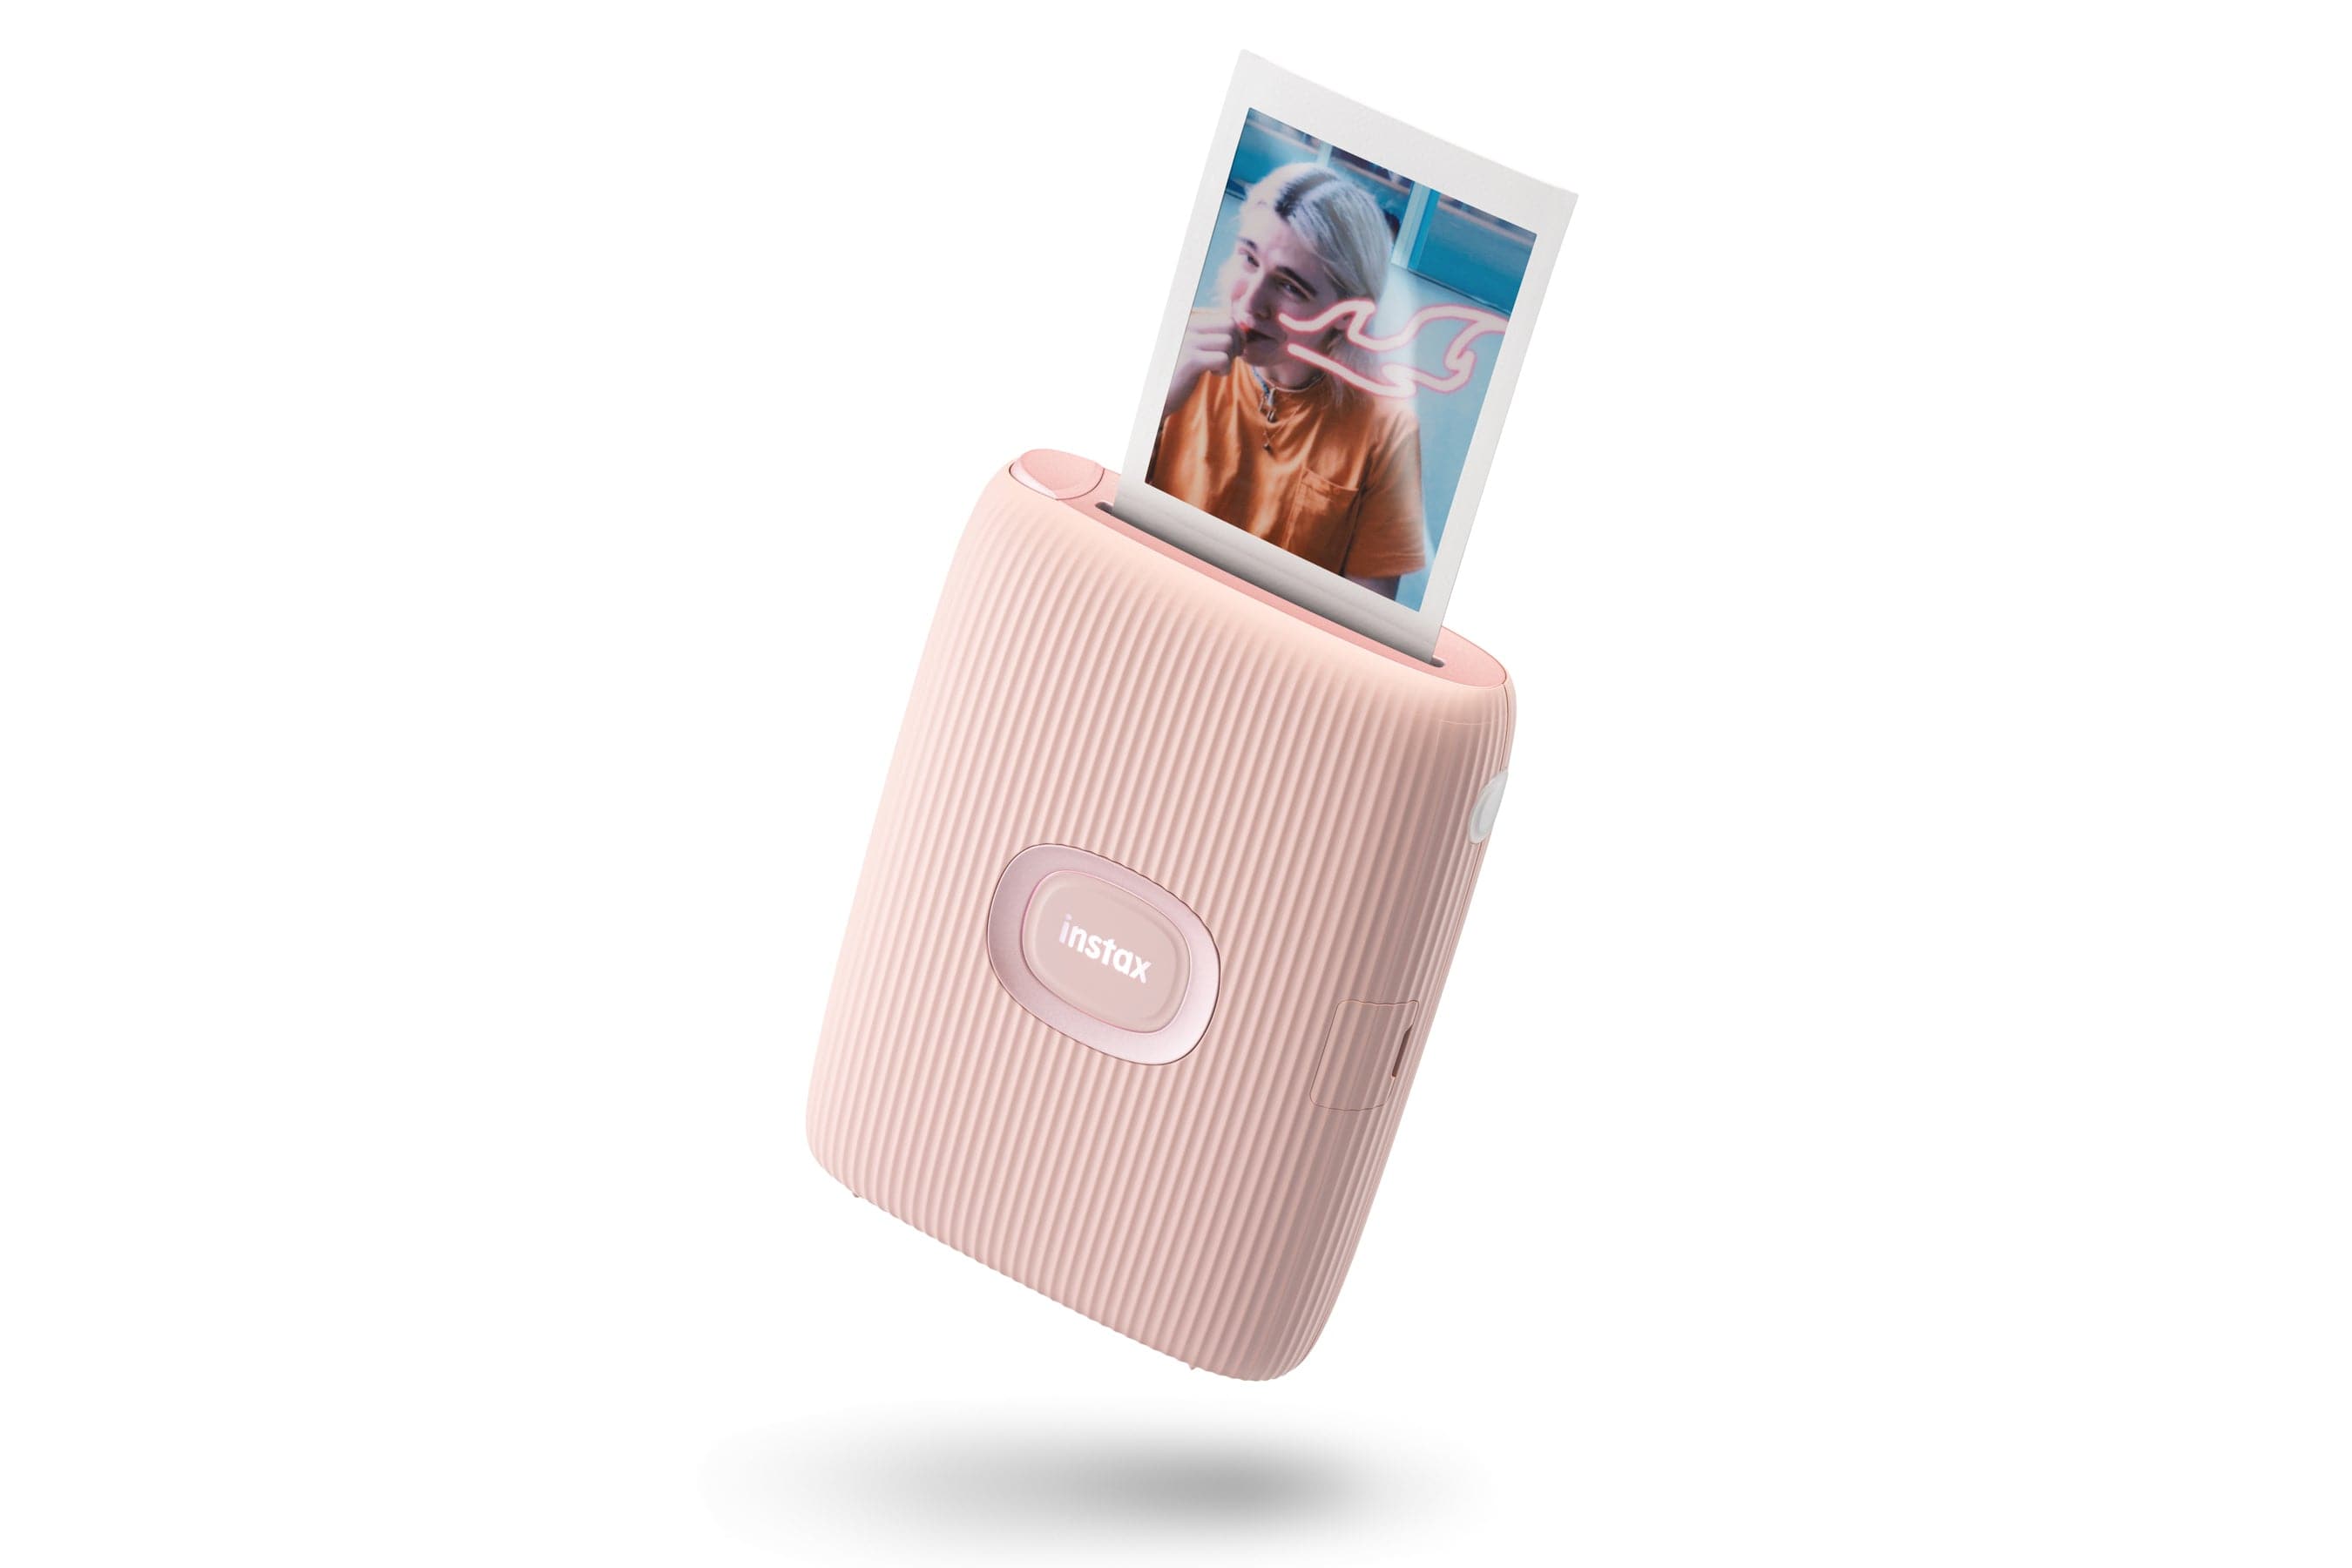 Fujifilm Instax Mini Link 2 Wireless Photo Printer - Soft Pink (Printer Only)